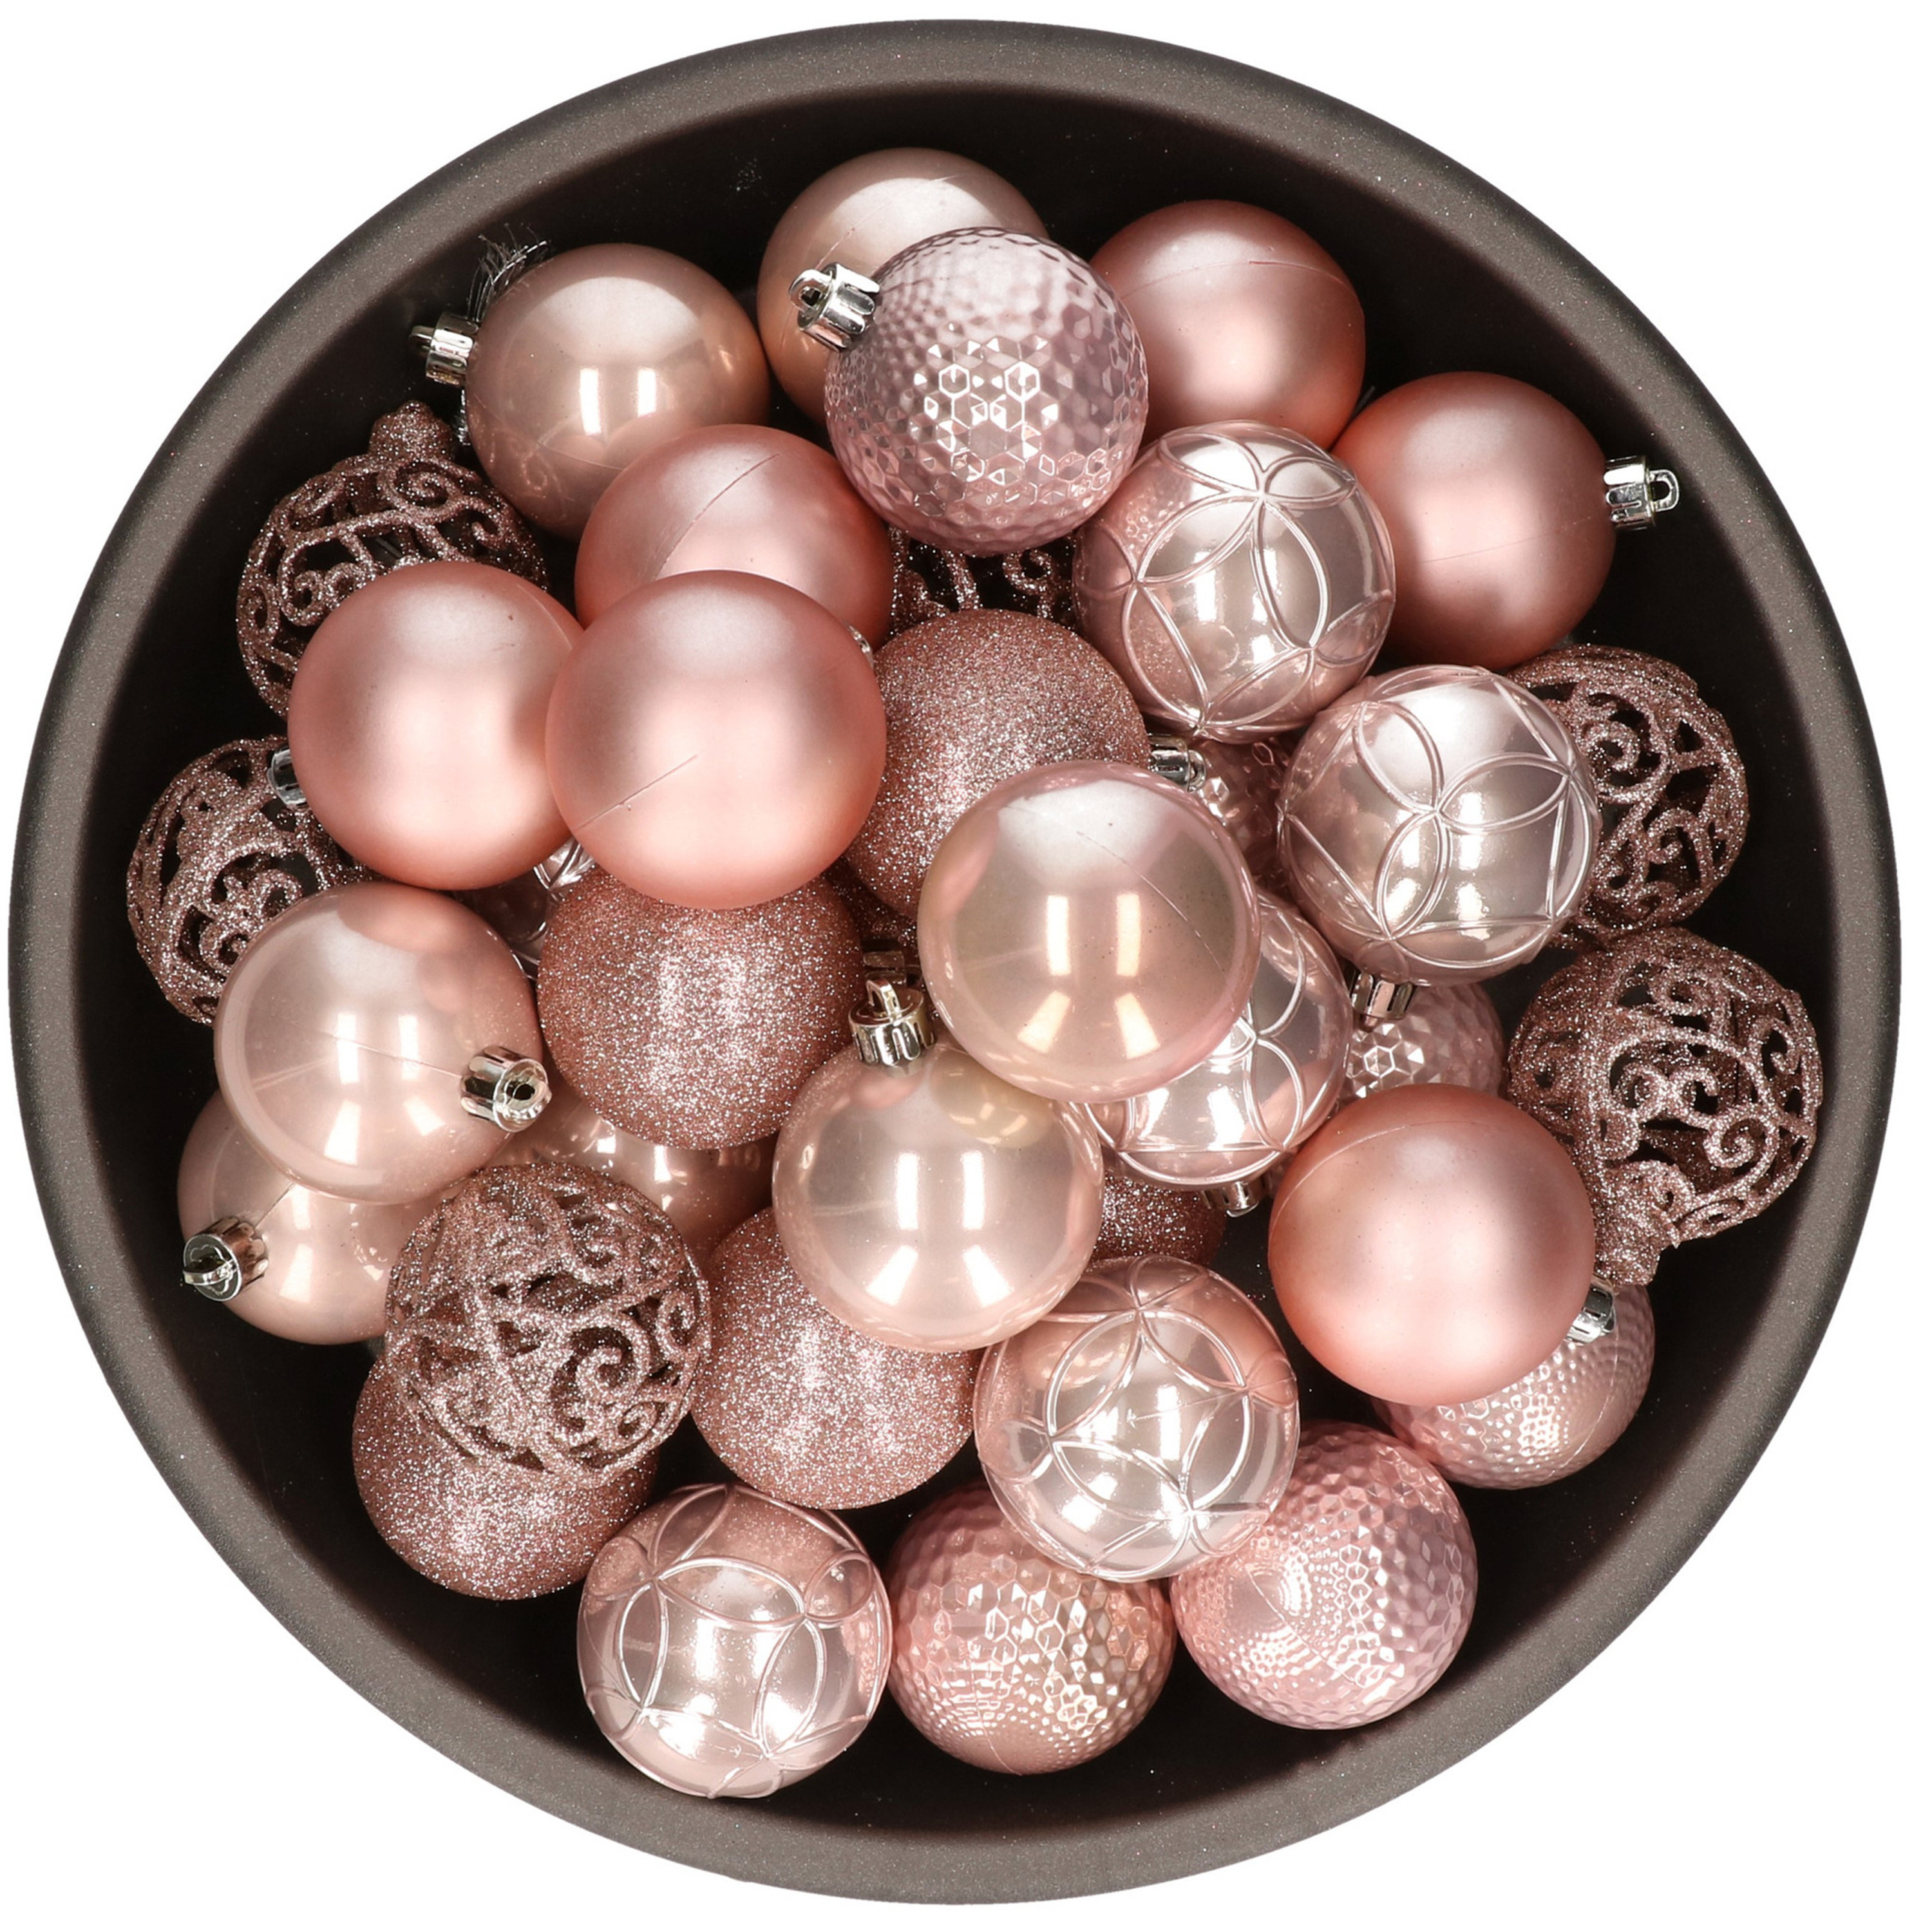 37x stuks kunststof kerstballen lichtroze (blush pink) 6 cm glans-mat-glitter mix